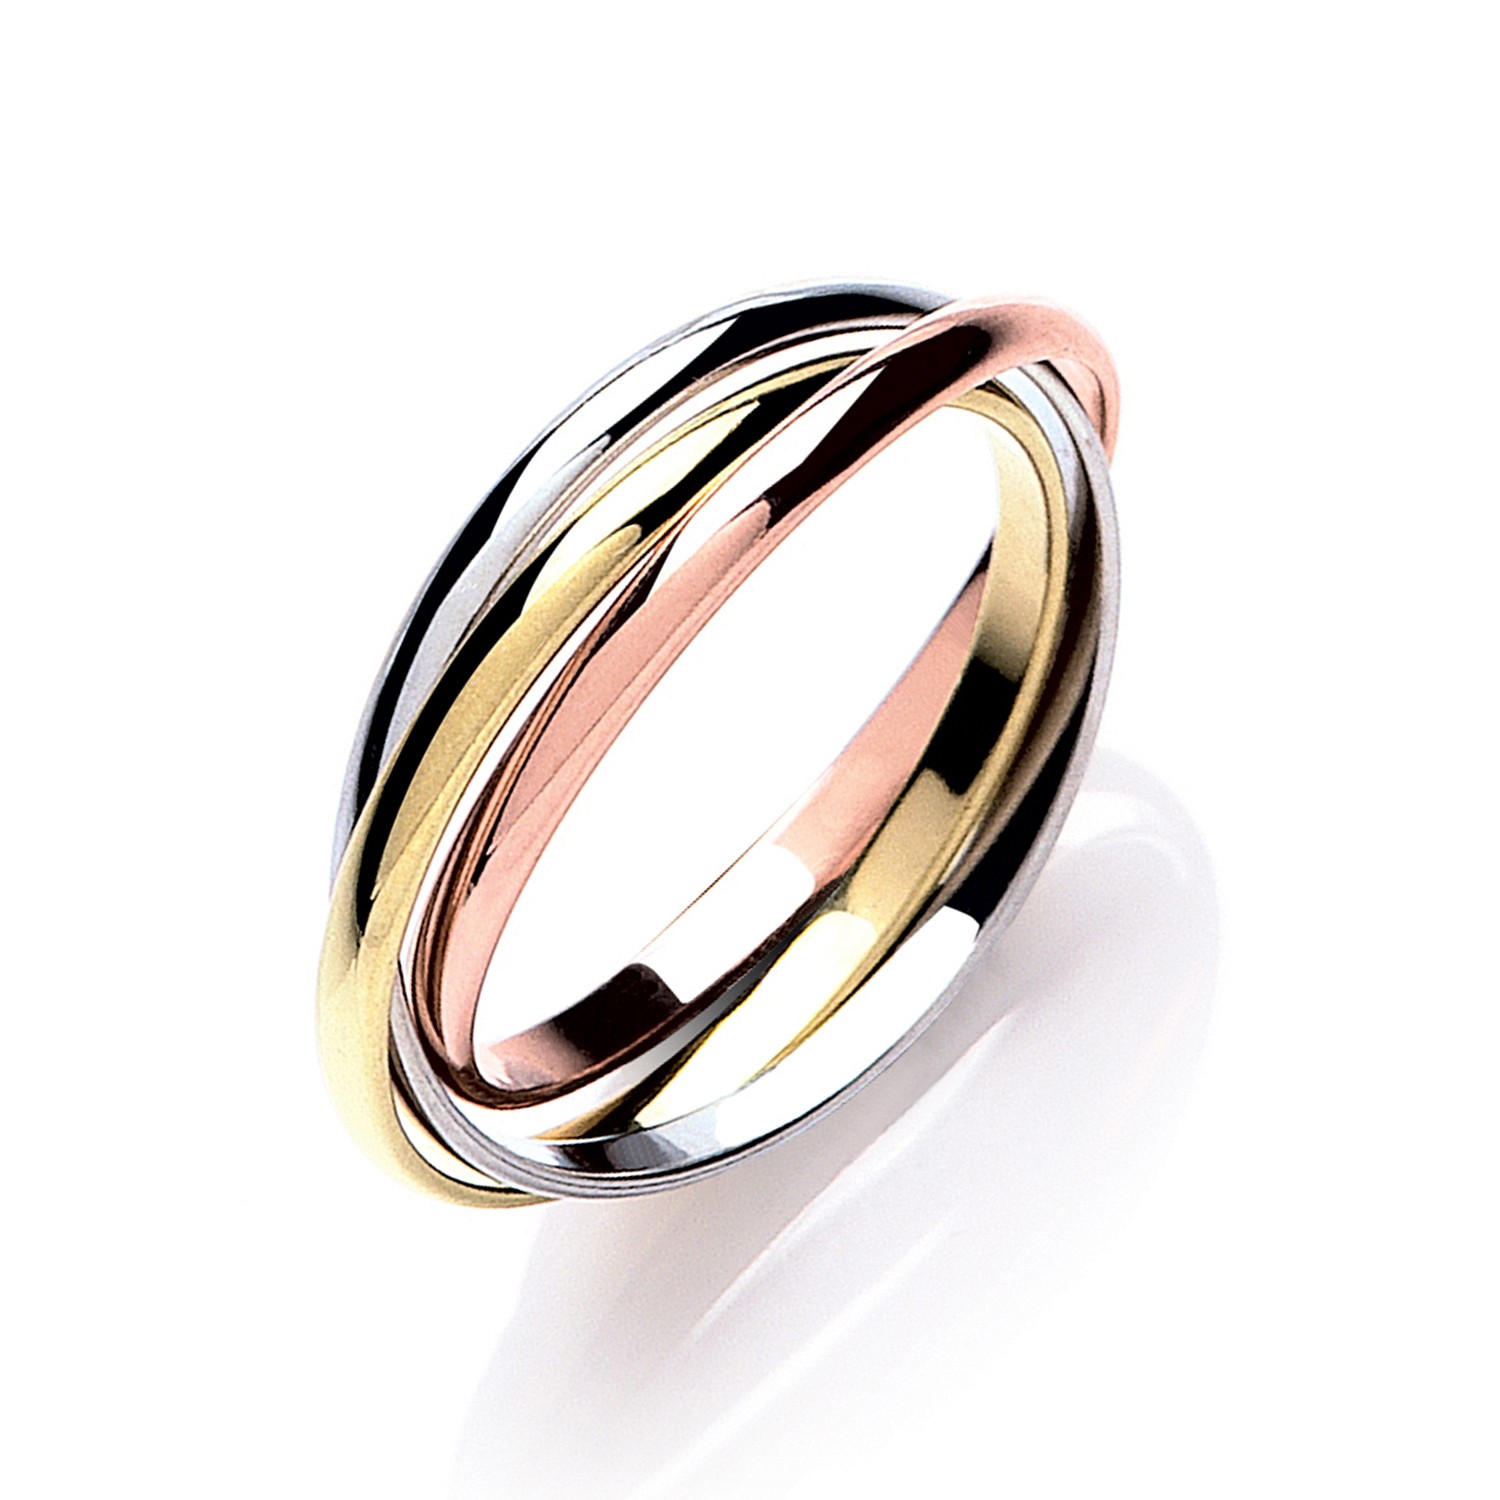 2mm Russian Wedding Ring 9ct Gold - Northumberland Goldsmiths